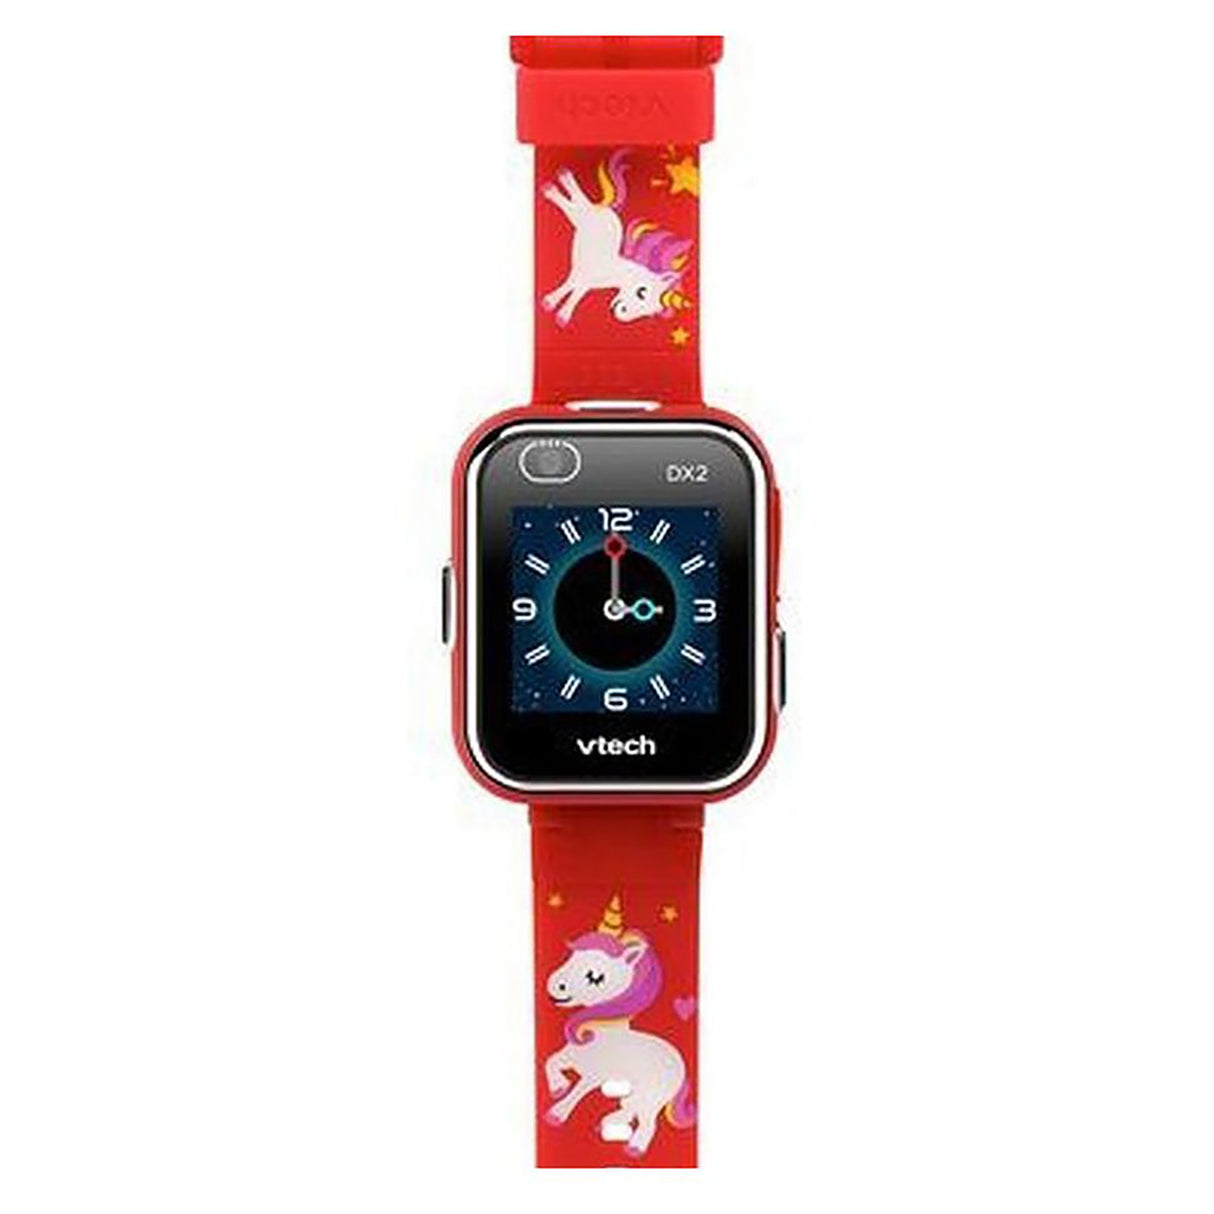 Kidizoom Smartwatch Dx2.0, Red